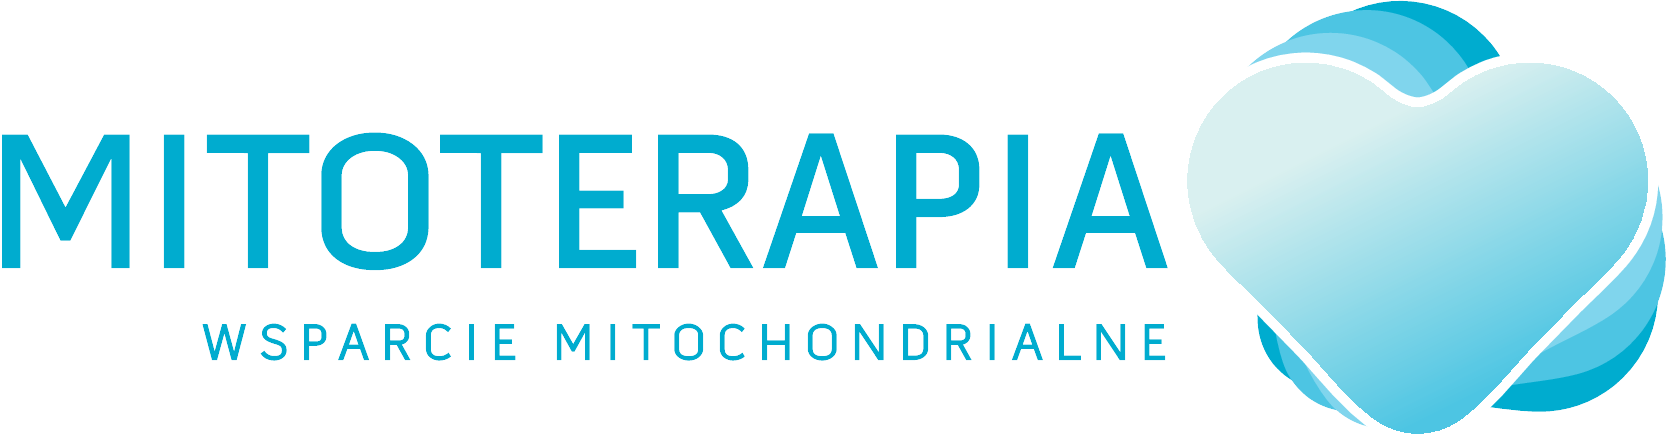 MitoTerapia - Wsparcie Mitochondrialne